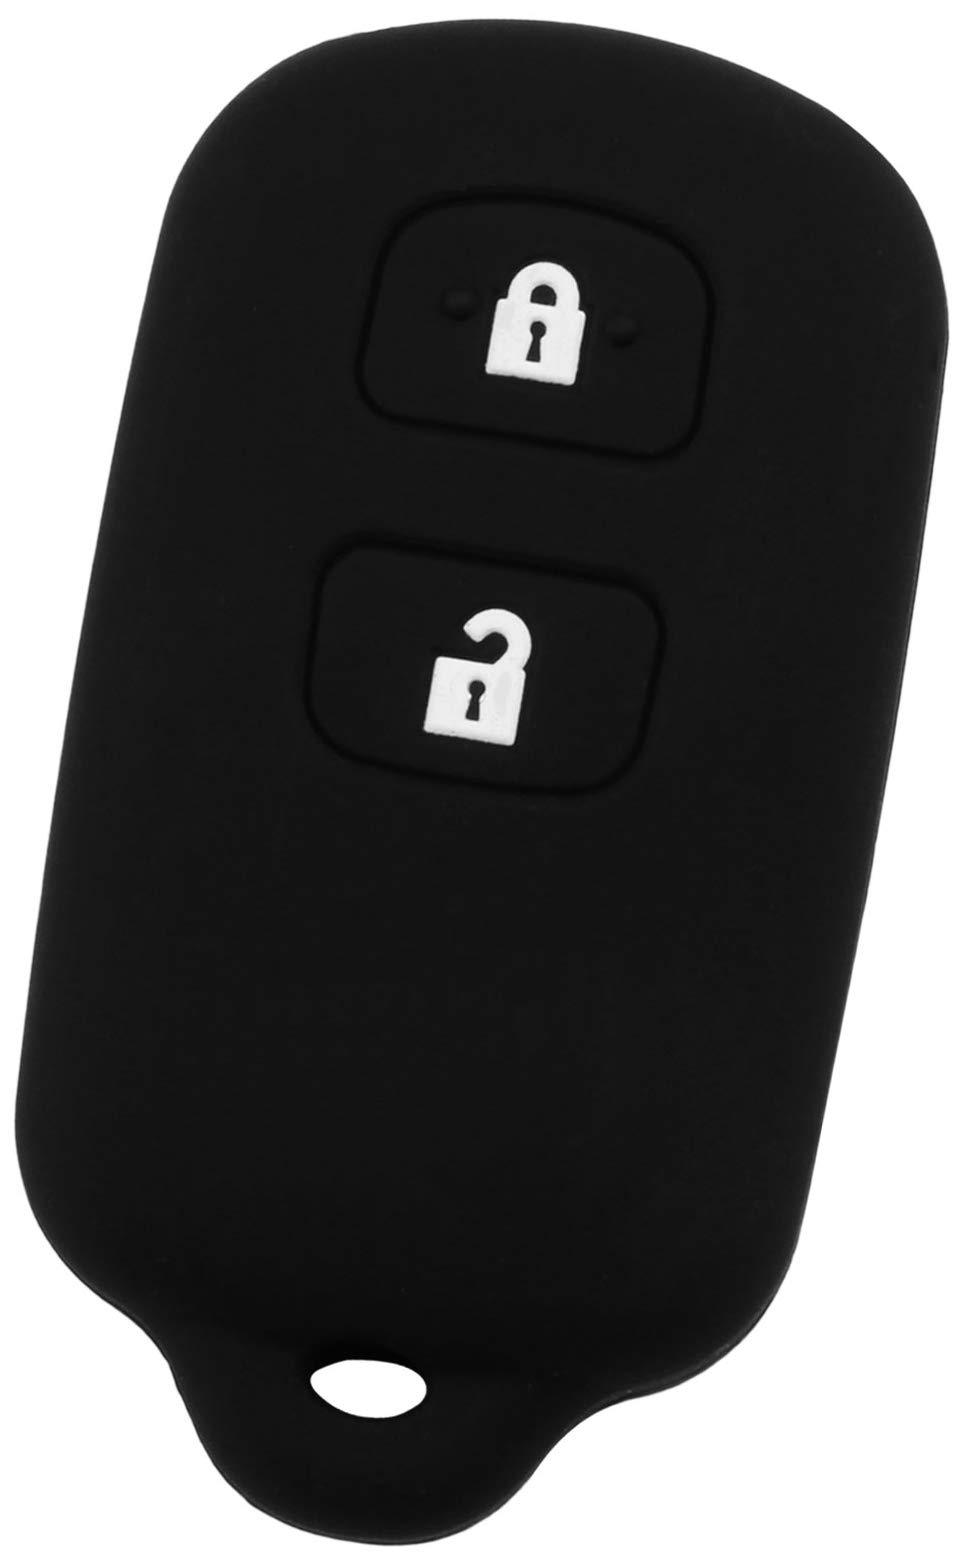  [AUSTRALIA] - KeyGuardz Keyless Remote Car Key Fob Shell Cover Soft Rubber Case for Toyota Scion Celica Corolla Echo Highlander Yaris